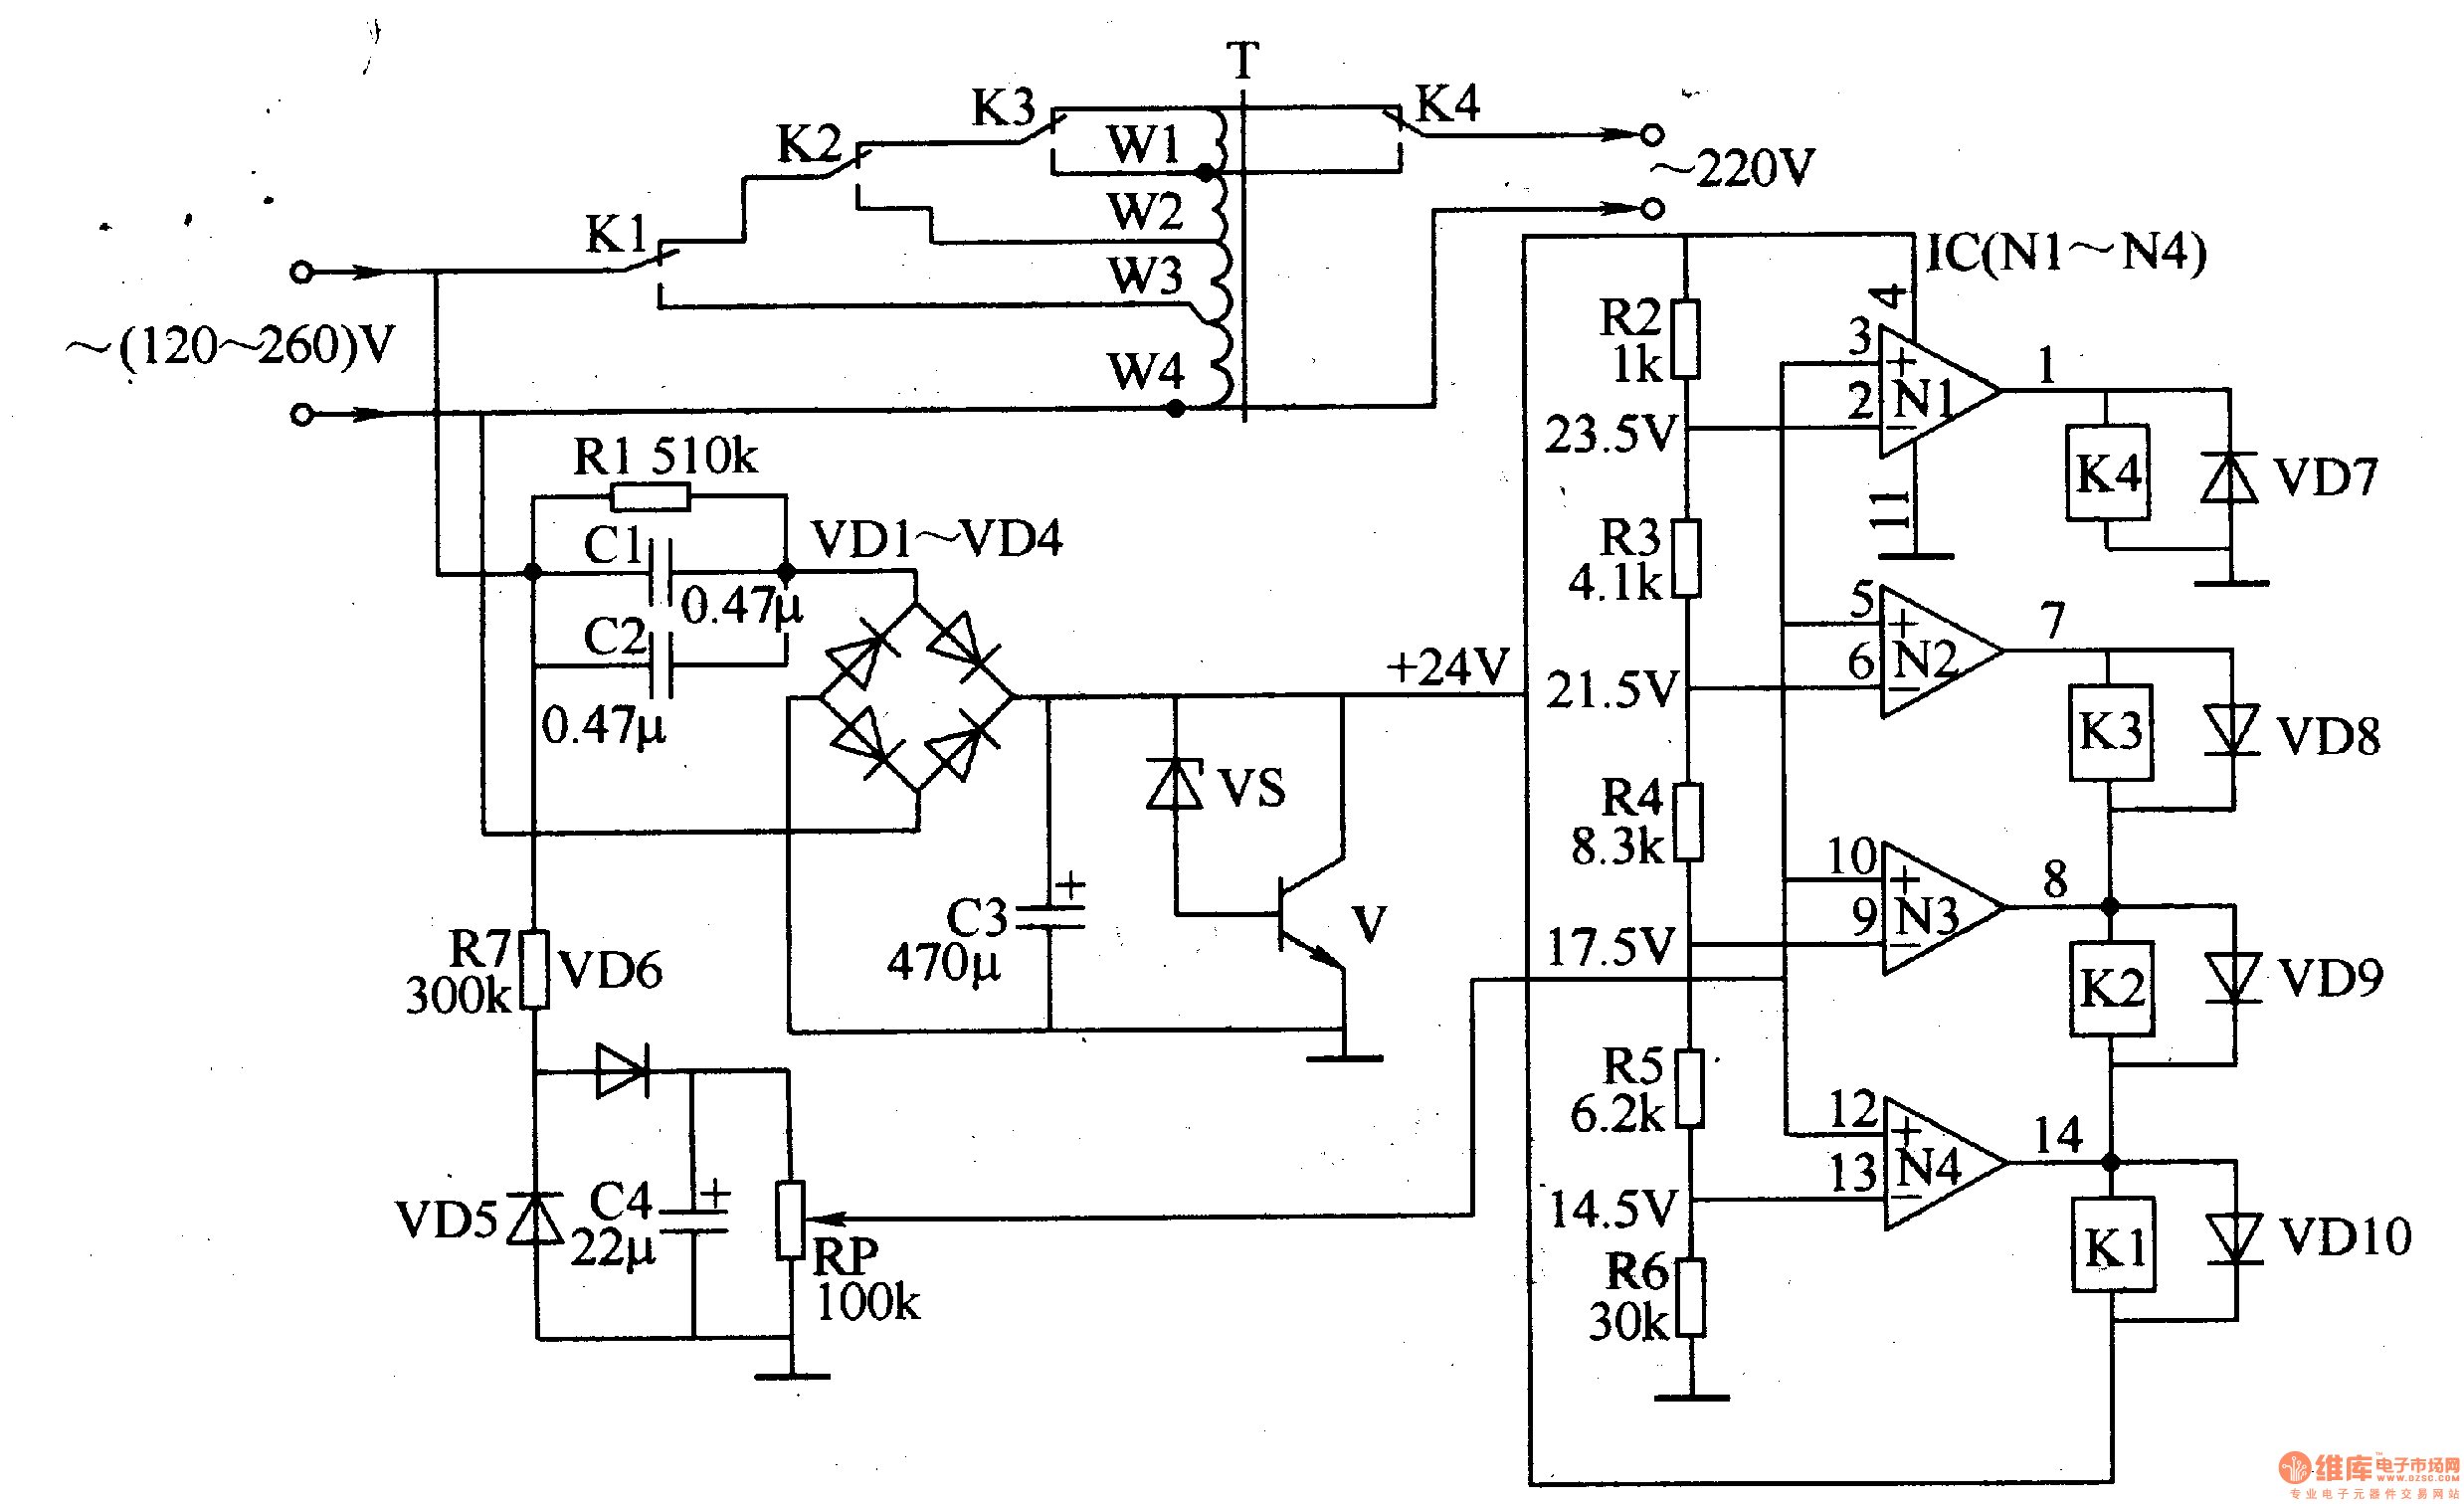 AC Voltage Regulator Three - Power_Supply_Circuit - Diagram - SeekIC.com